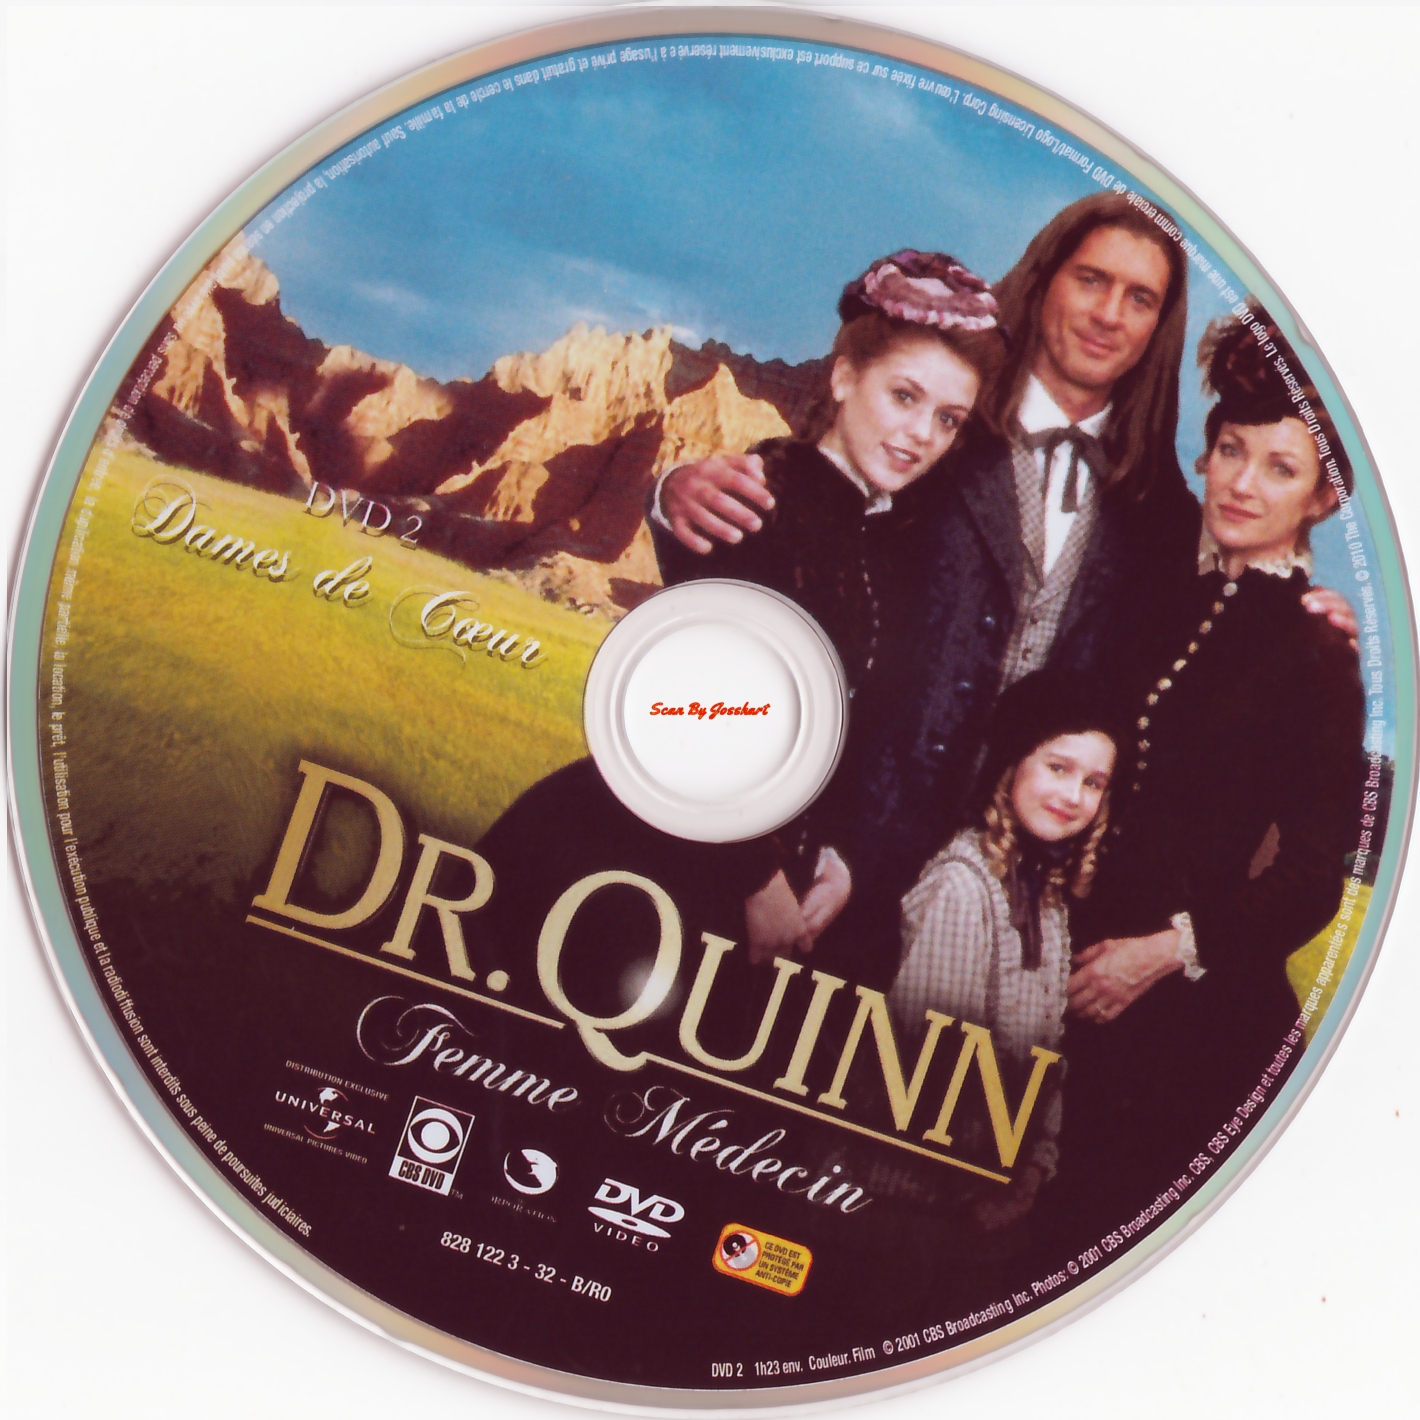 Docteur Quinn femme mdecin - Dames de coeur 2dvd